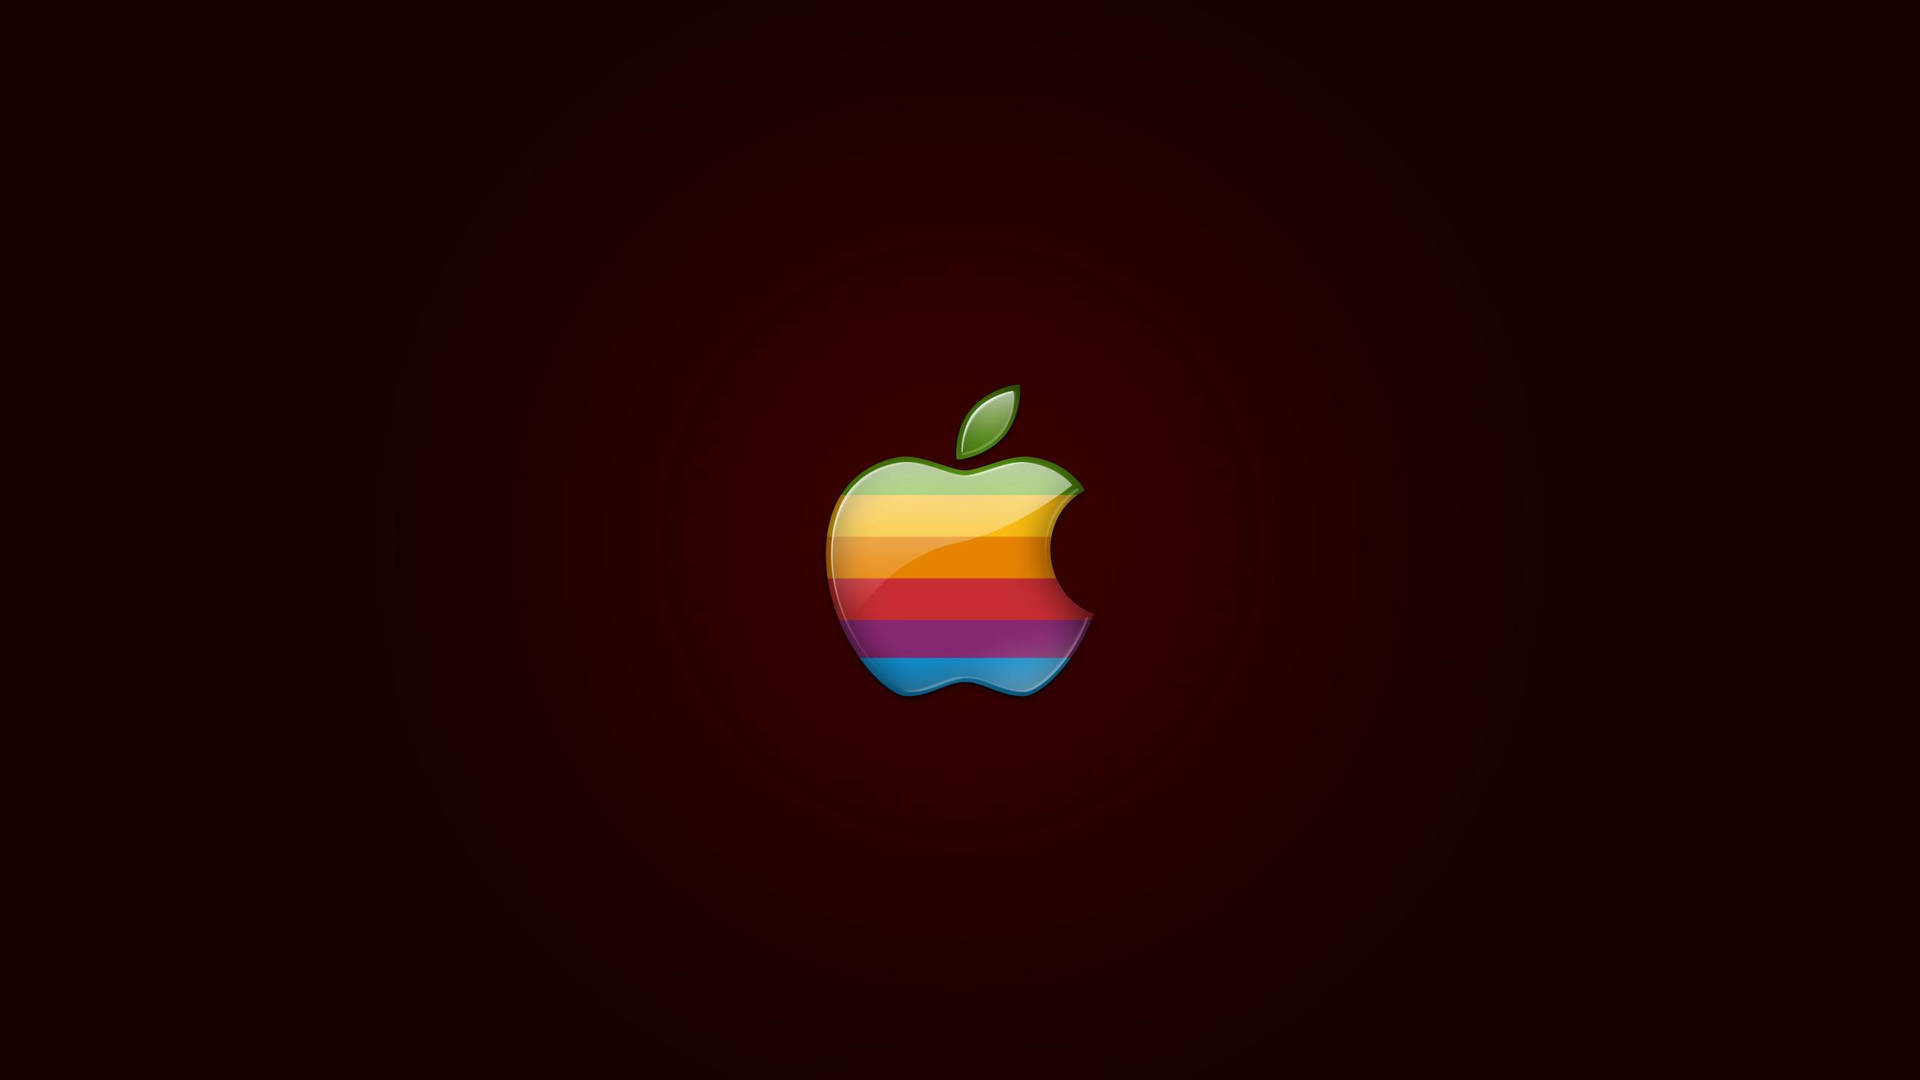 Apple Logo 4k In Rainbow Background